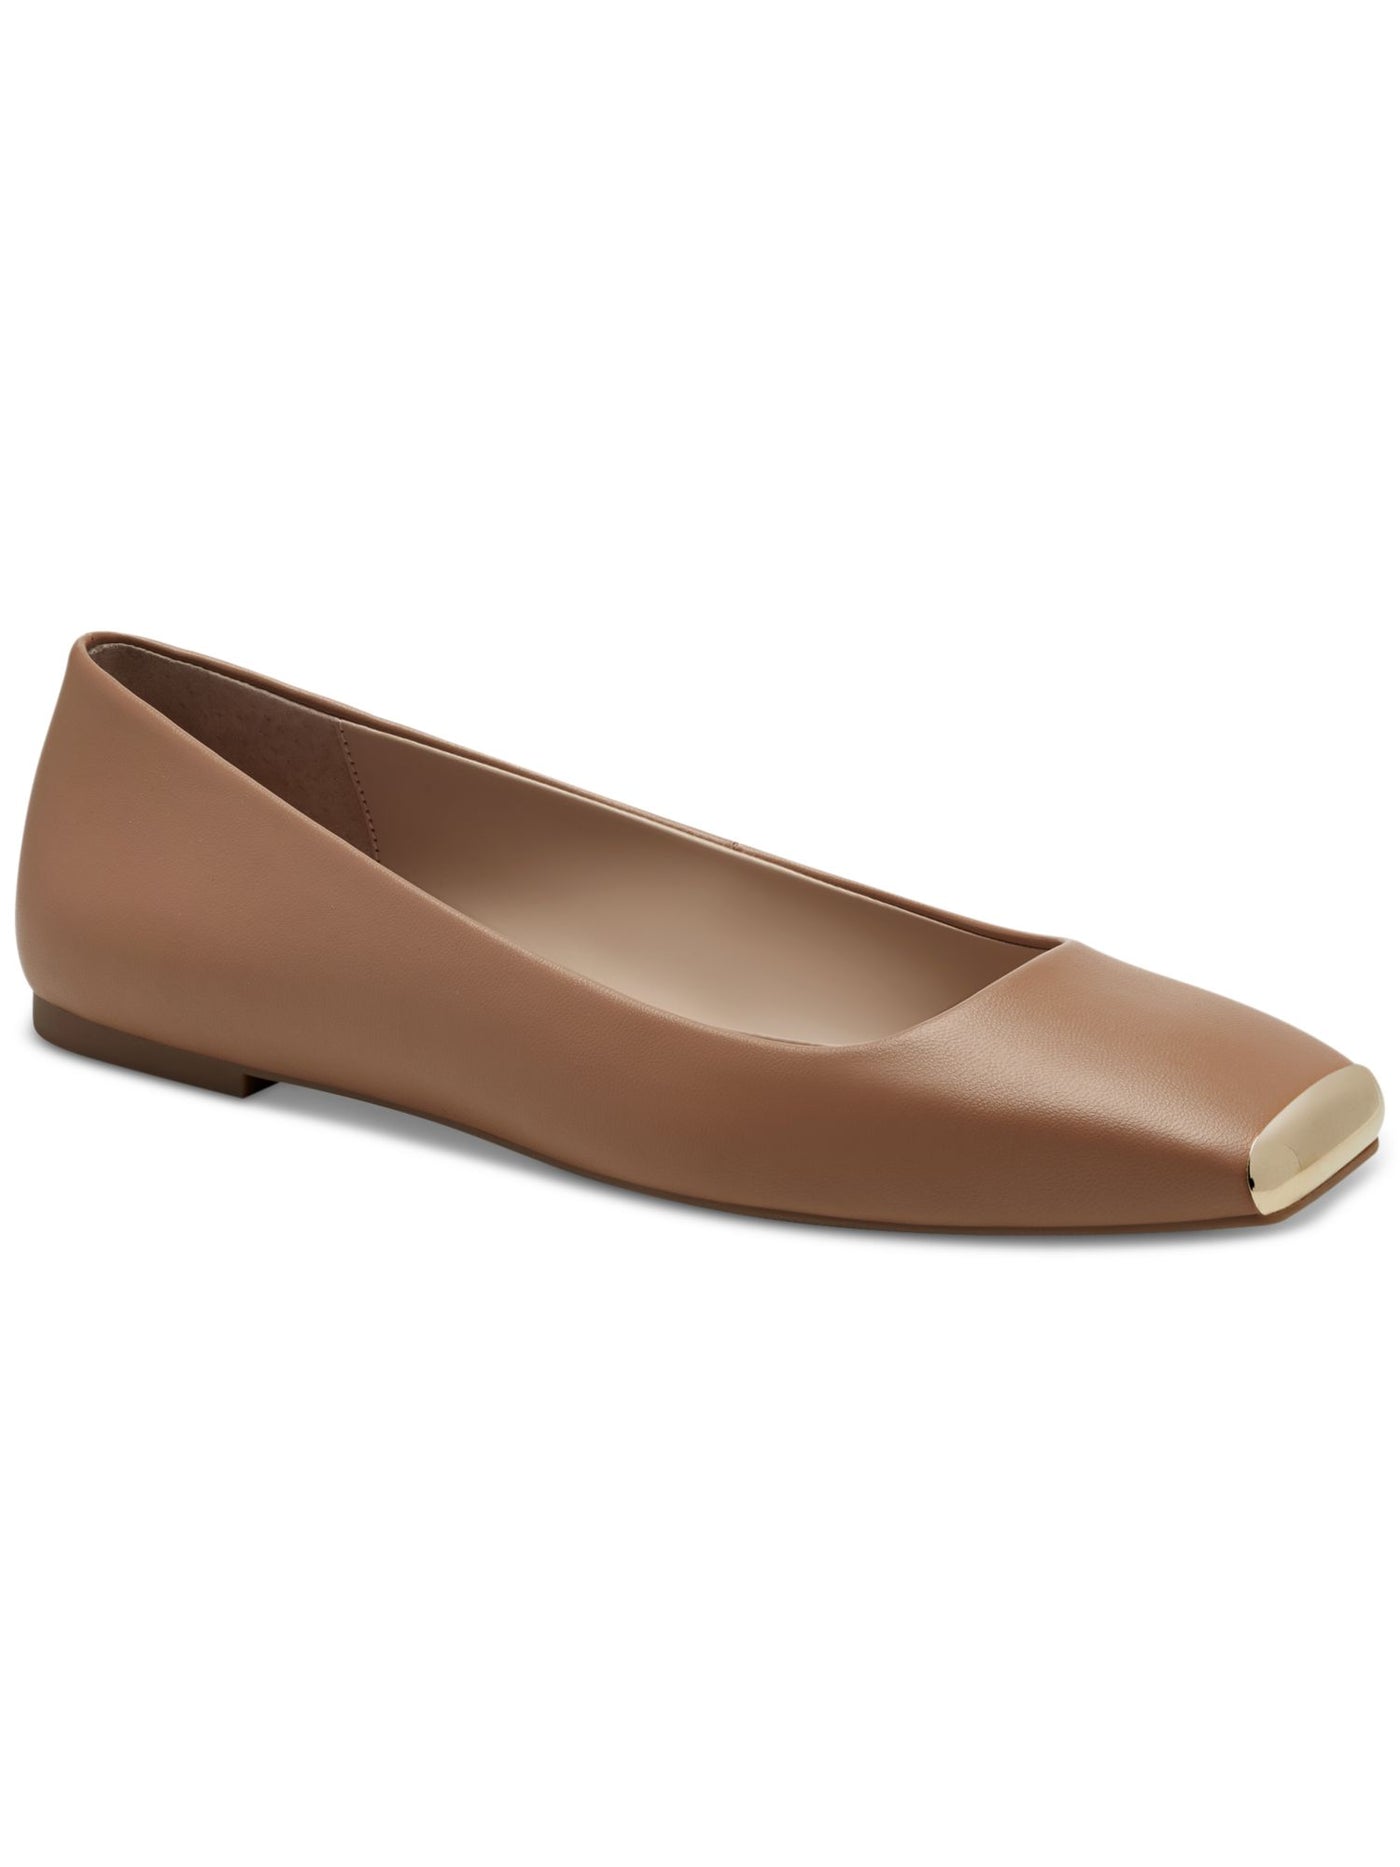 ALFANI Womens Brown Flexible Sole Padded Metallic Neptoon Square Toe Block Heel Slip On Flats Shoes 6 M